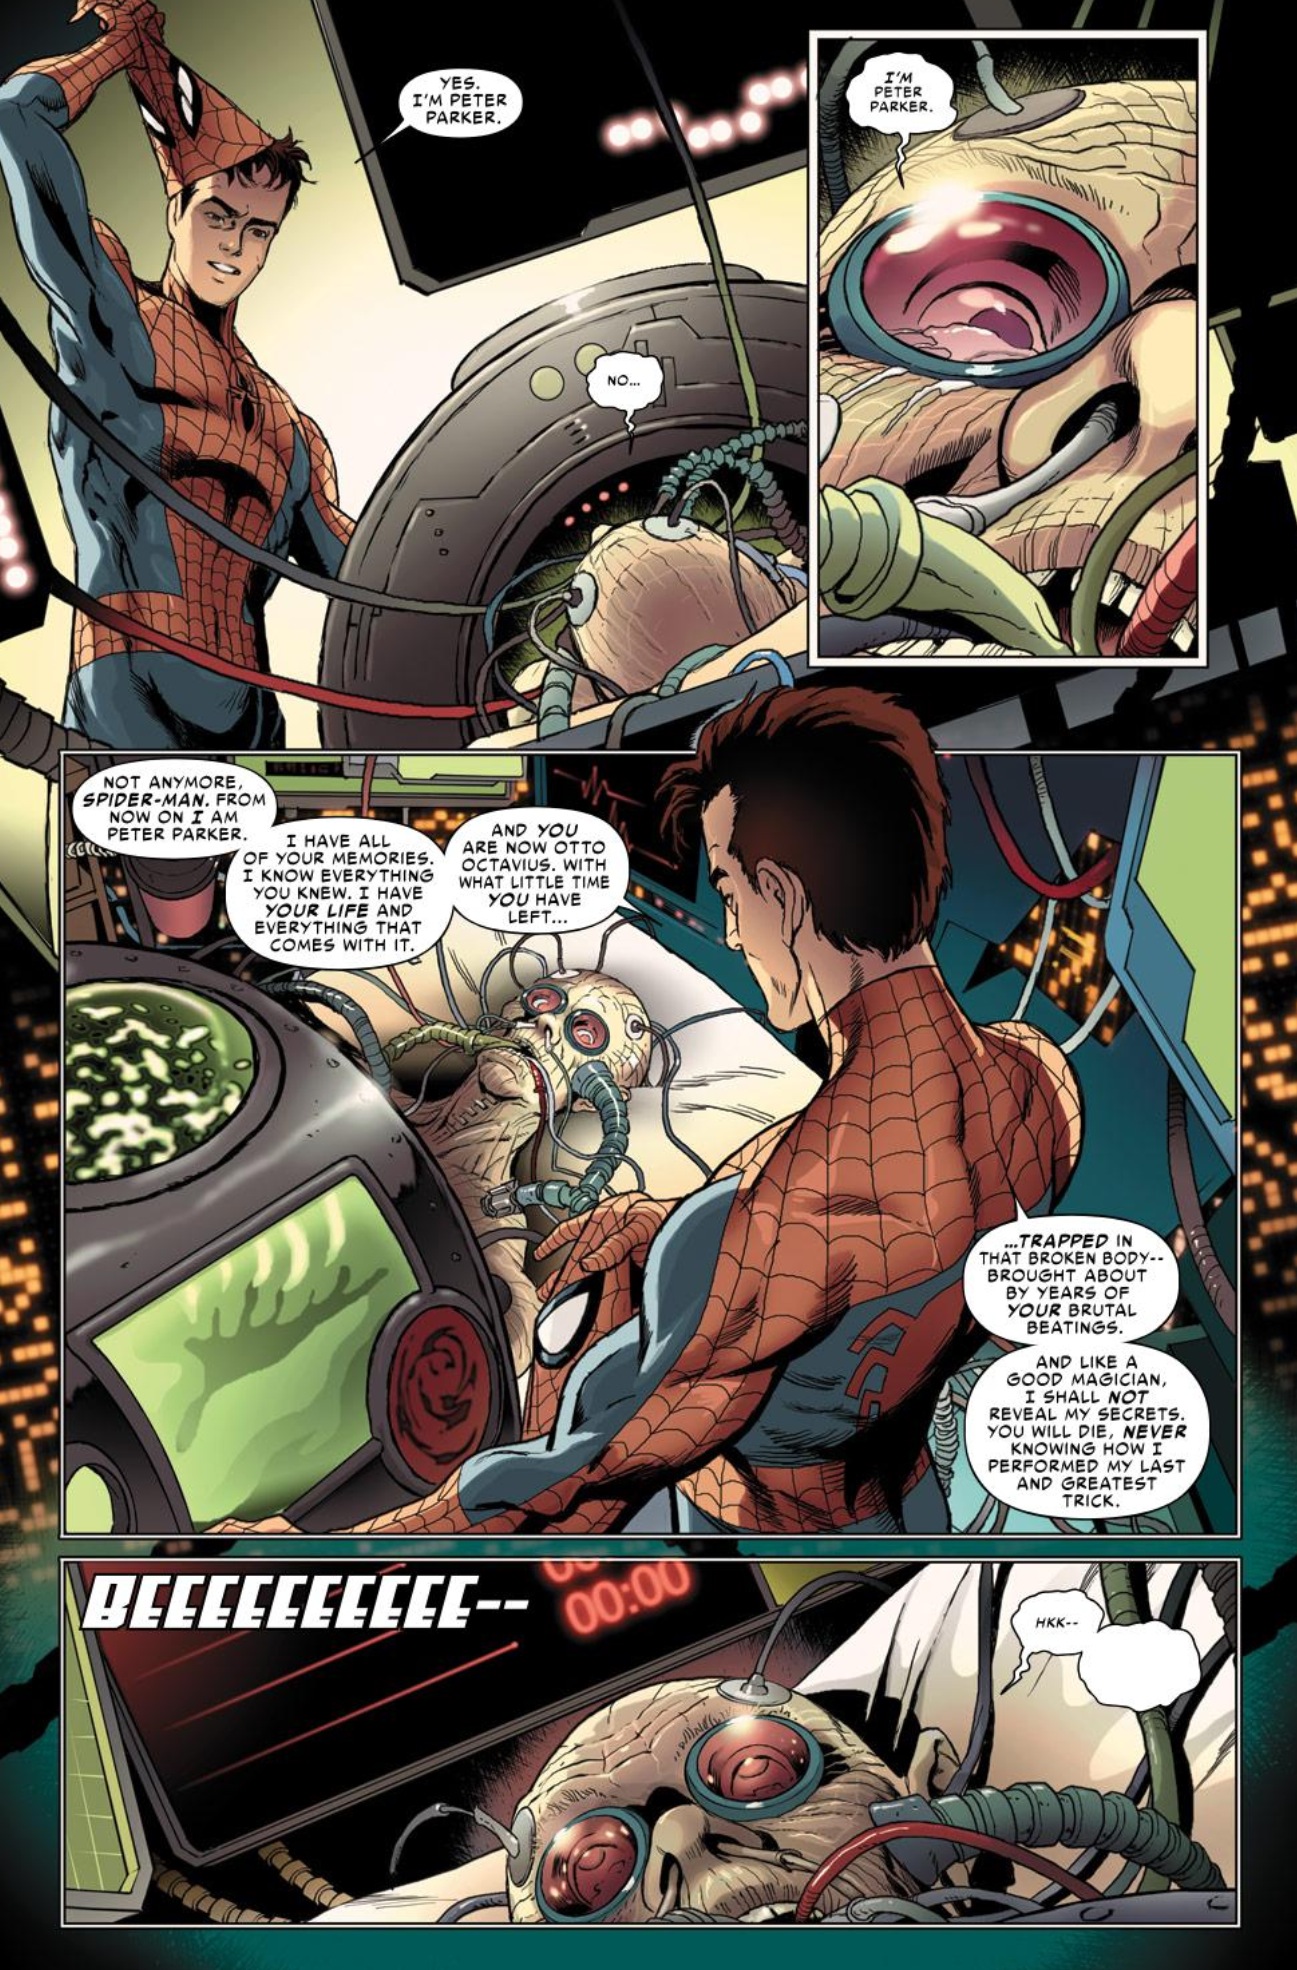 2012 AMAZING SPIDER-MAN #698 Marvel NOW! 